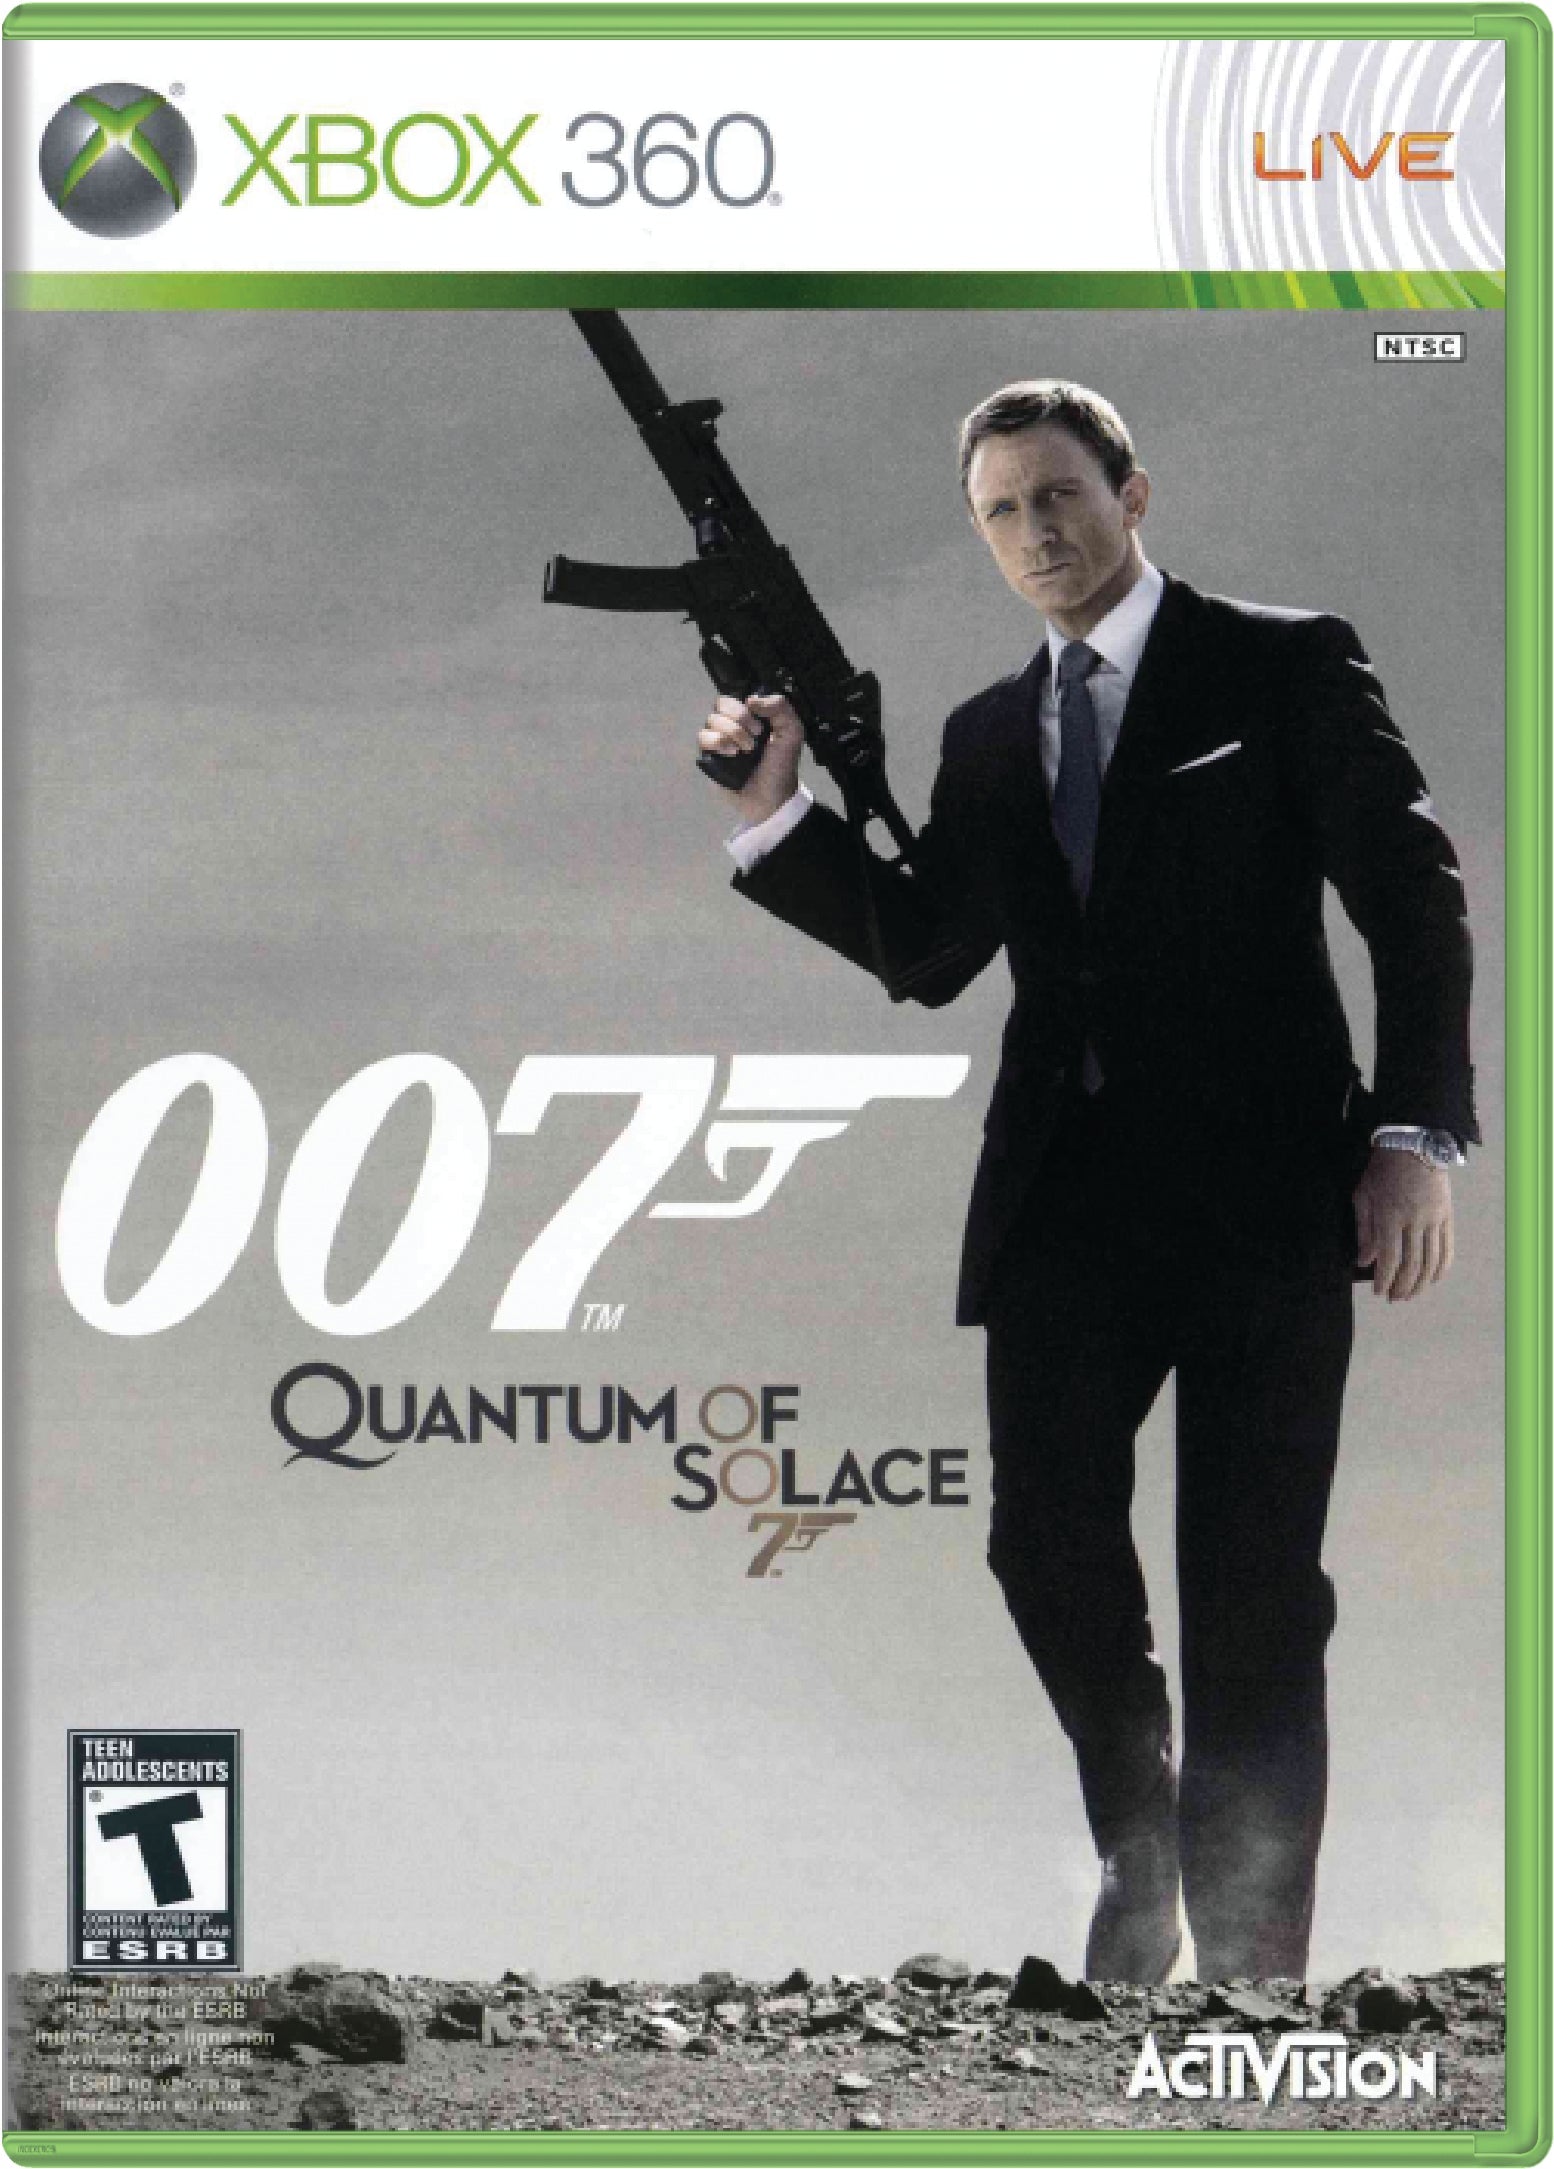 James Bond 007 Quantum of Solace Cover Art